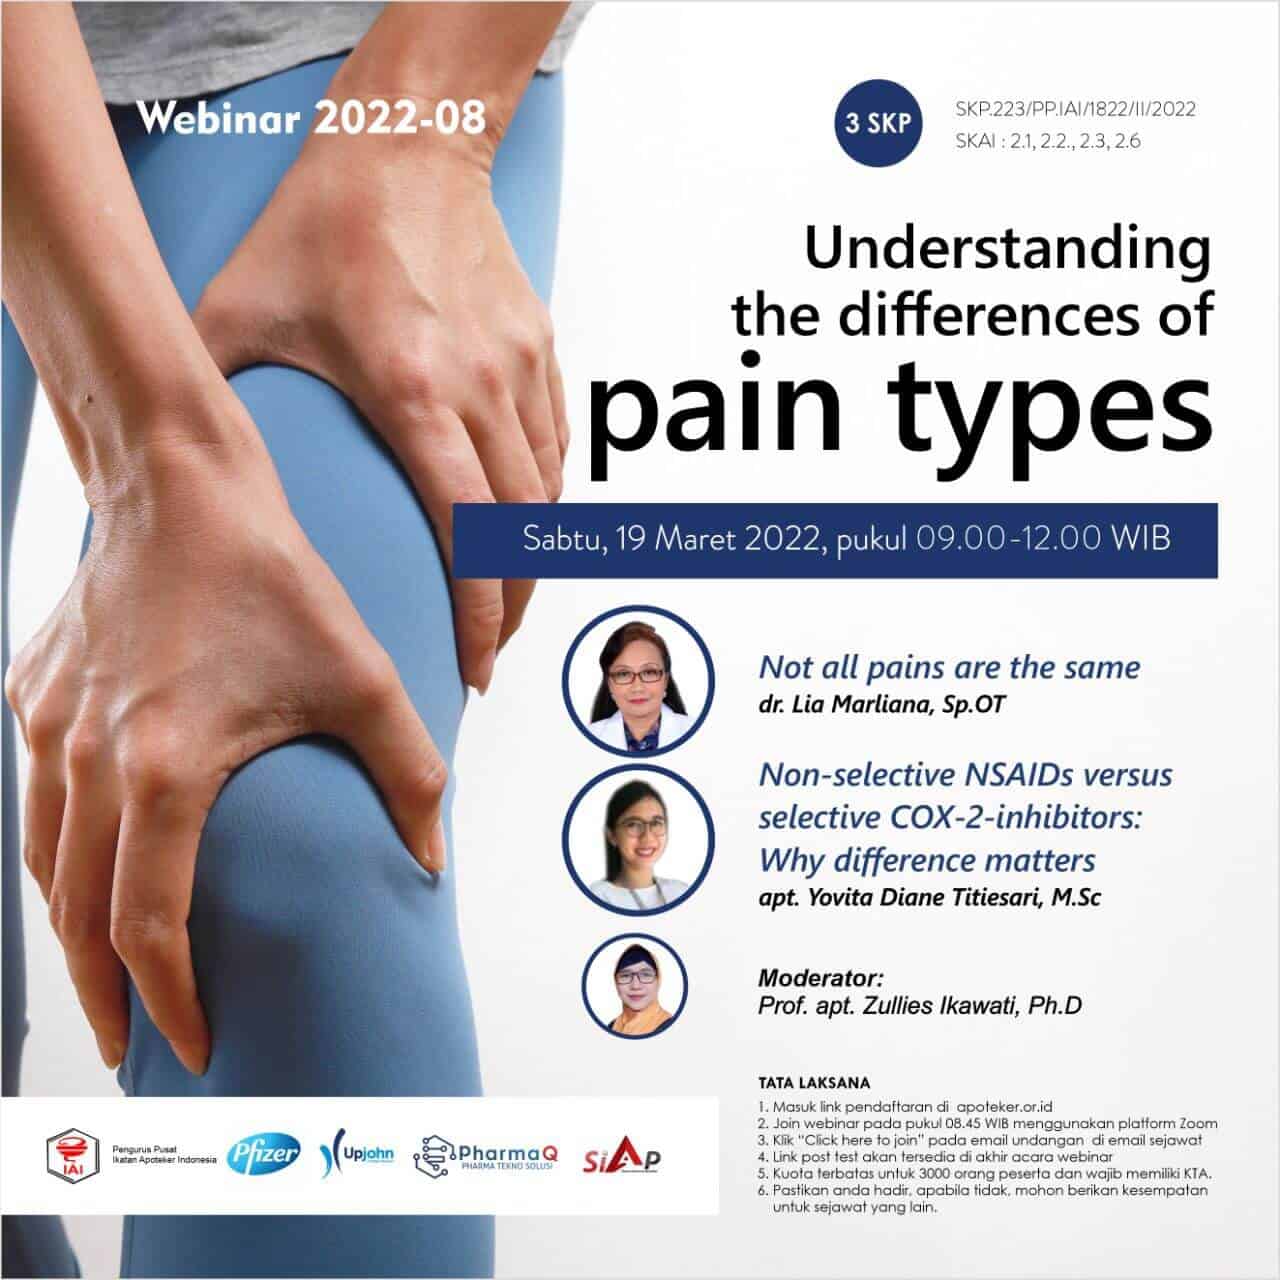 Kunci Jawaban Webinar Understanding the Differences of Pain Types [Webinar 2022-08]